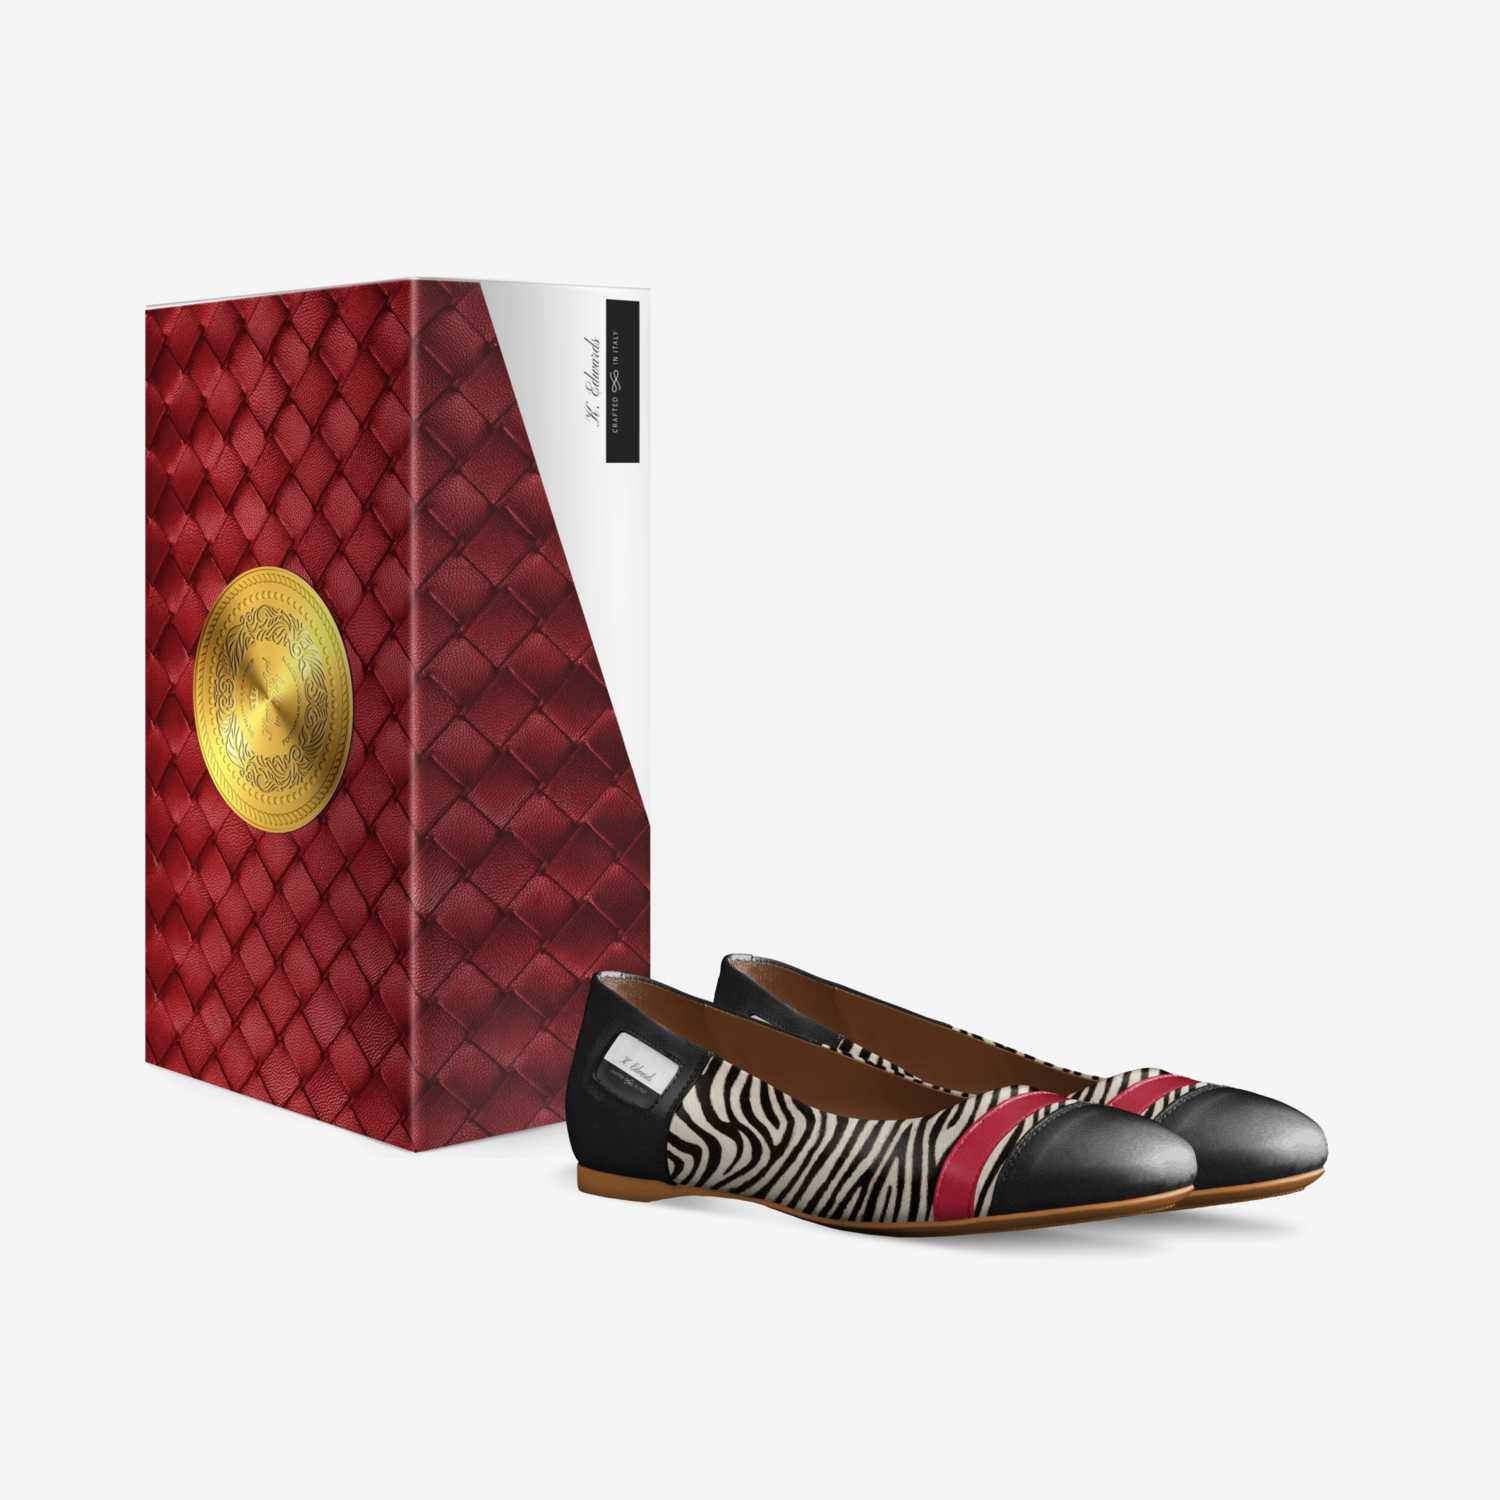 Karis custom made in Italy shoes by Karonda Edwards | Box view